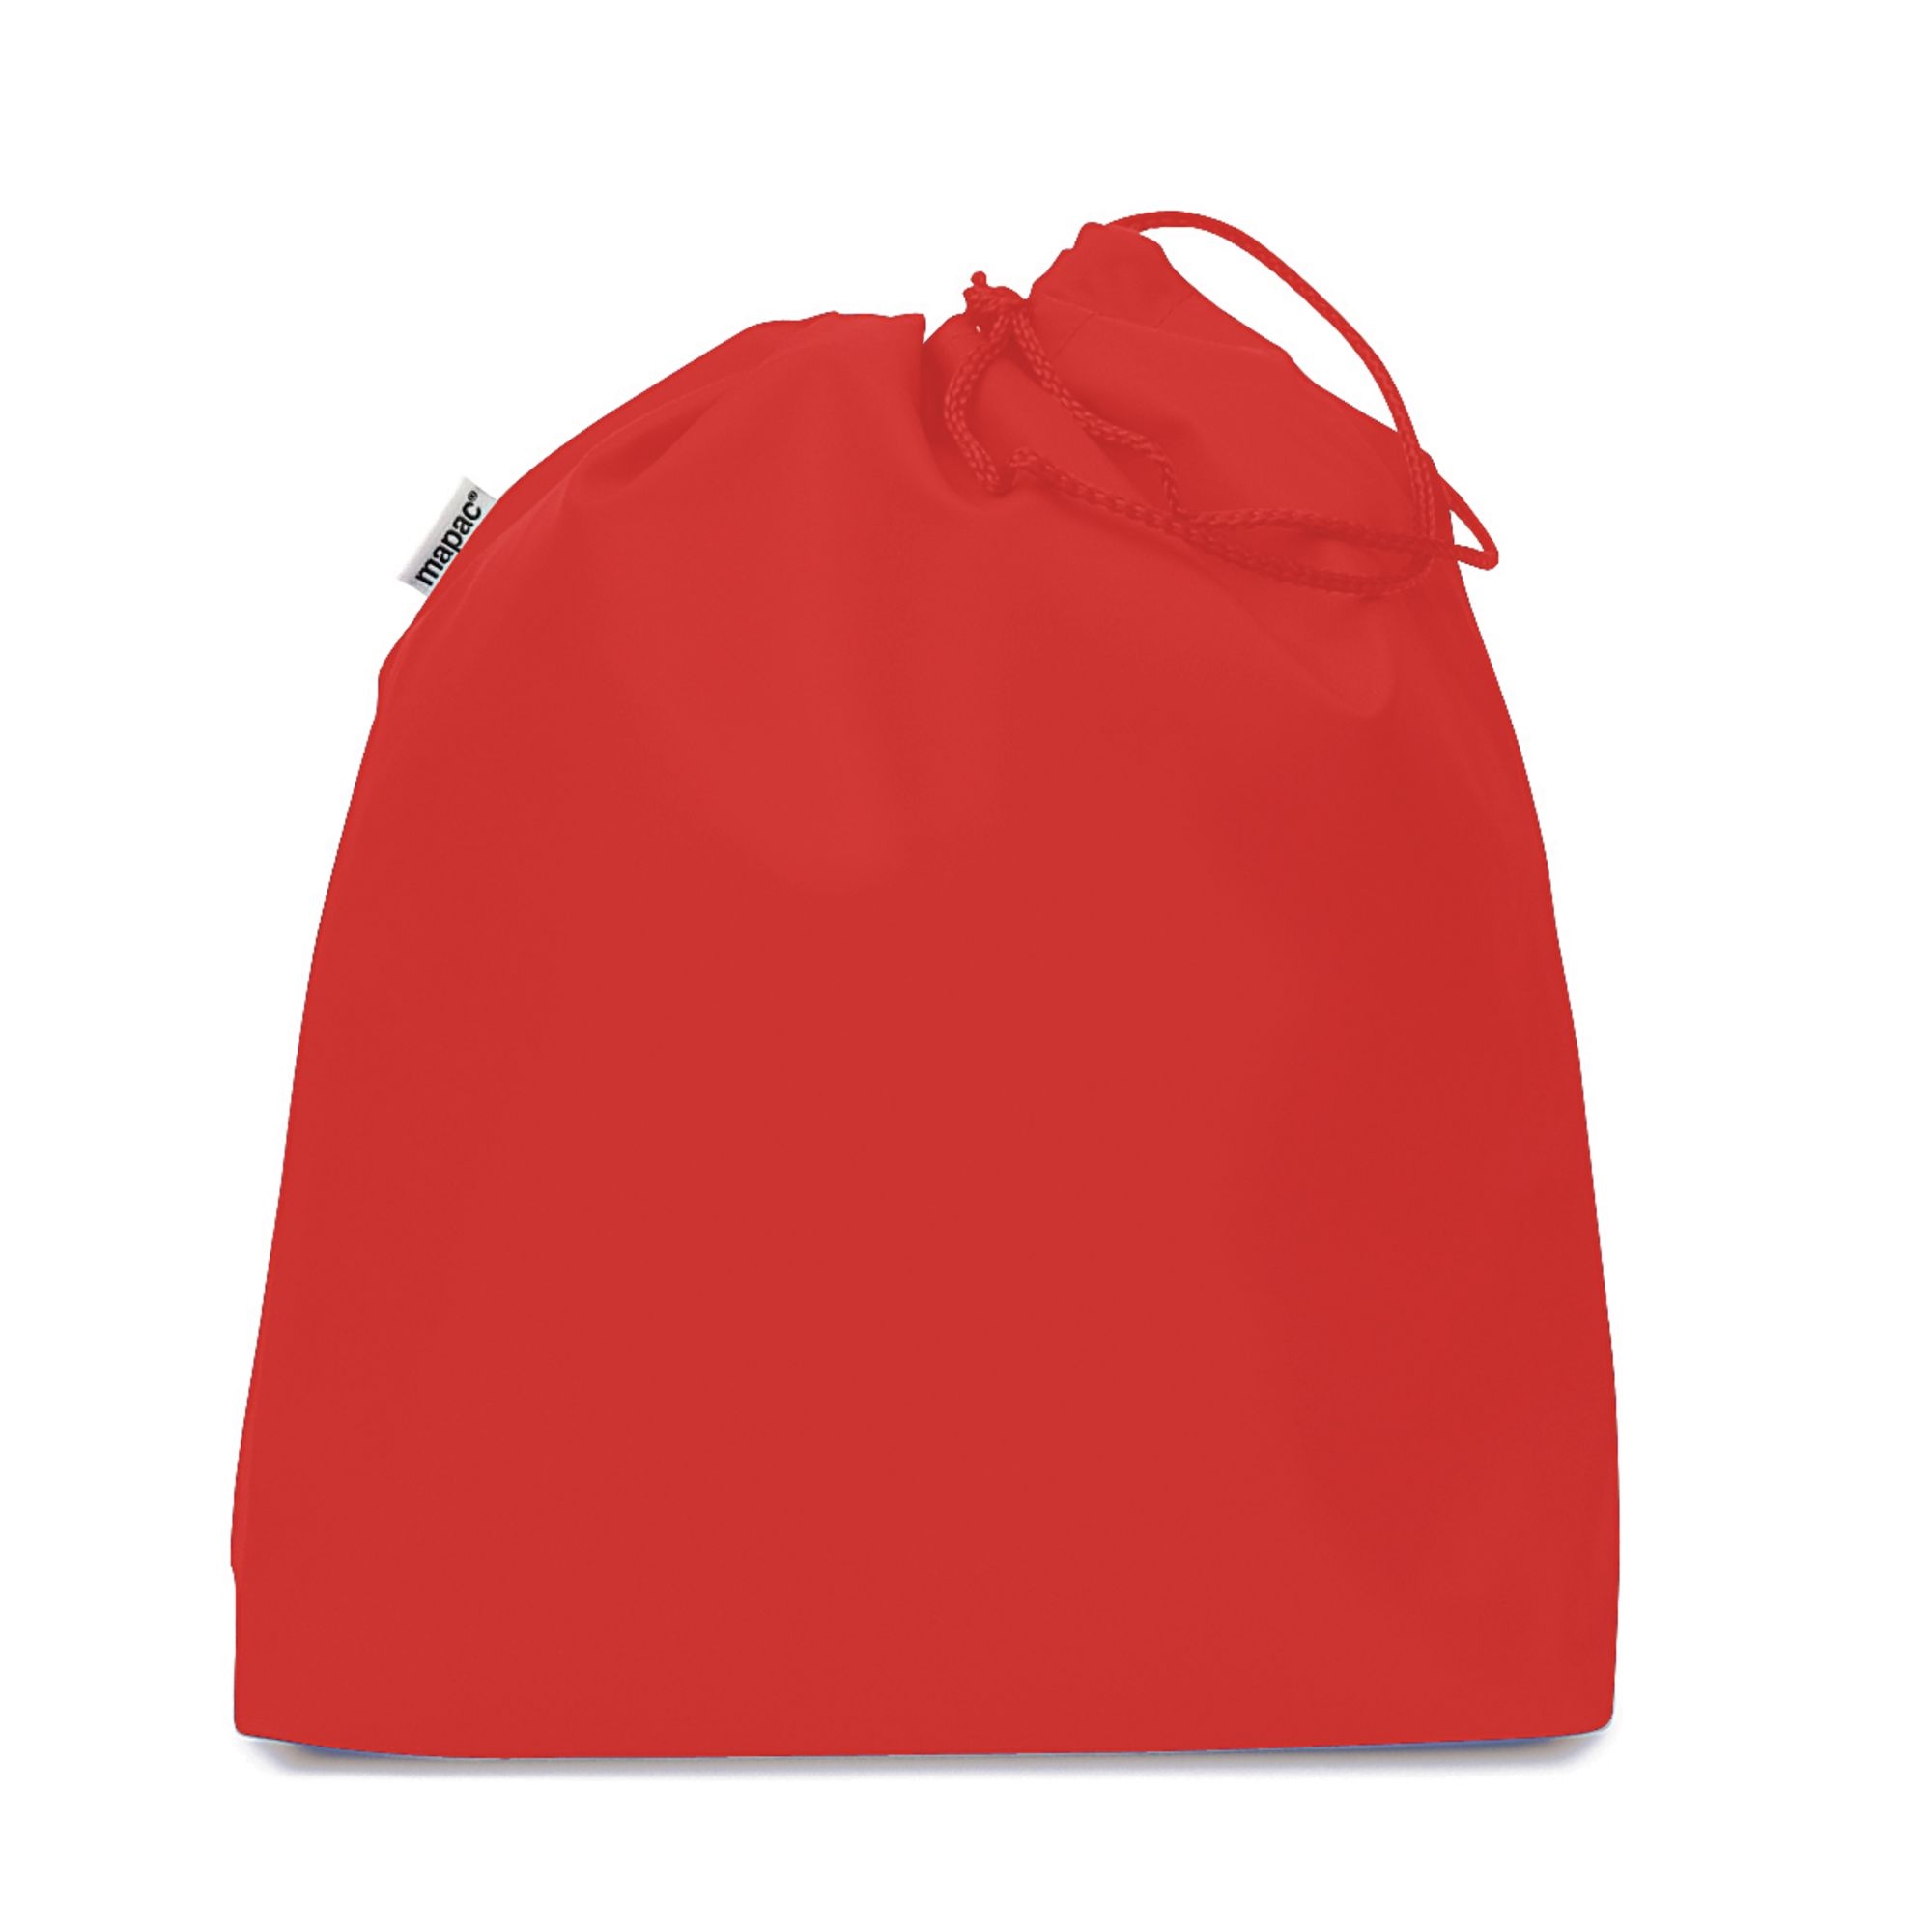 Plain Gym Bag Red - Pack of 25